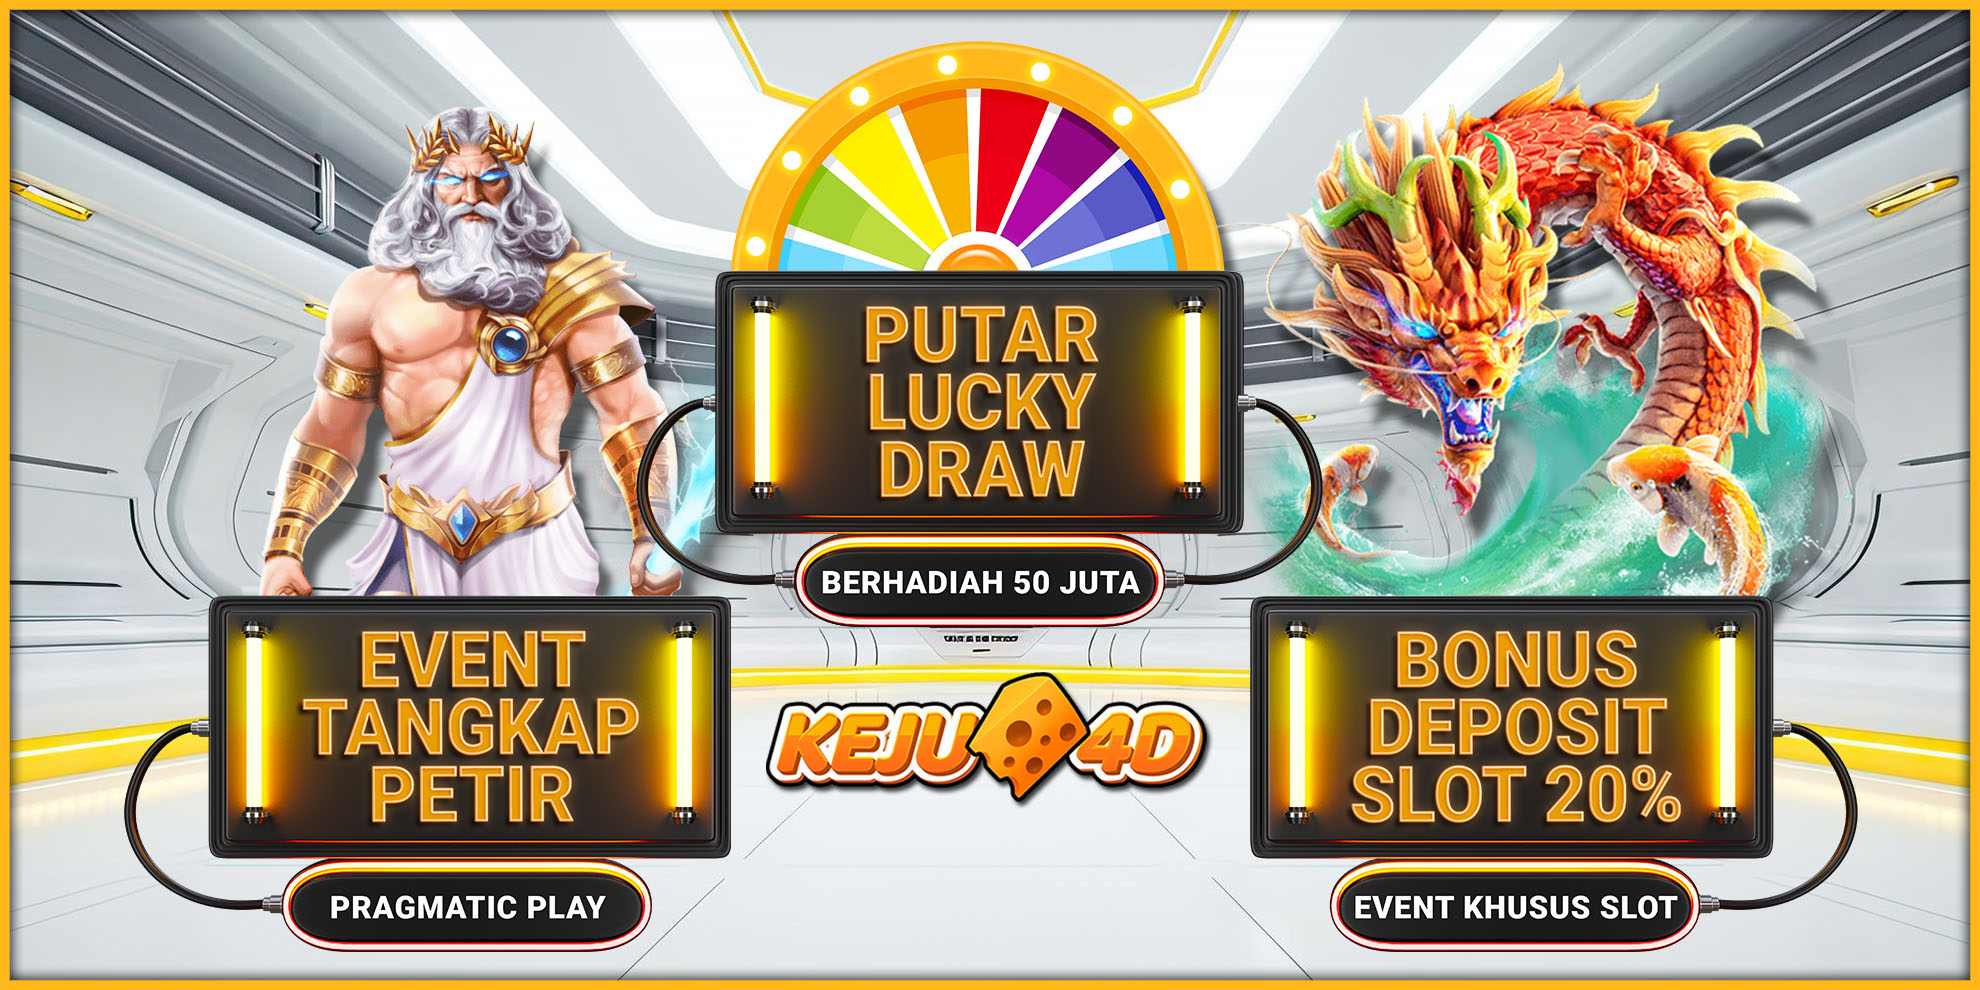 Keju4d Agen Pragmatic | Game Slot Online Indonesia Terpercaya